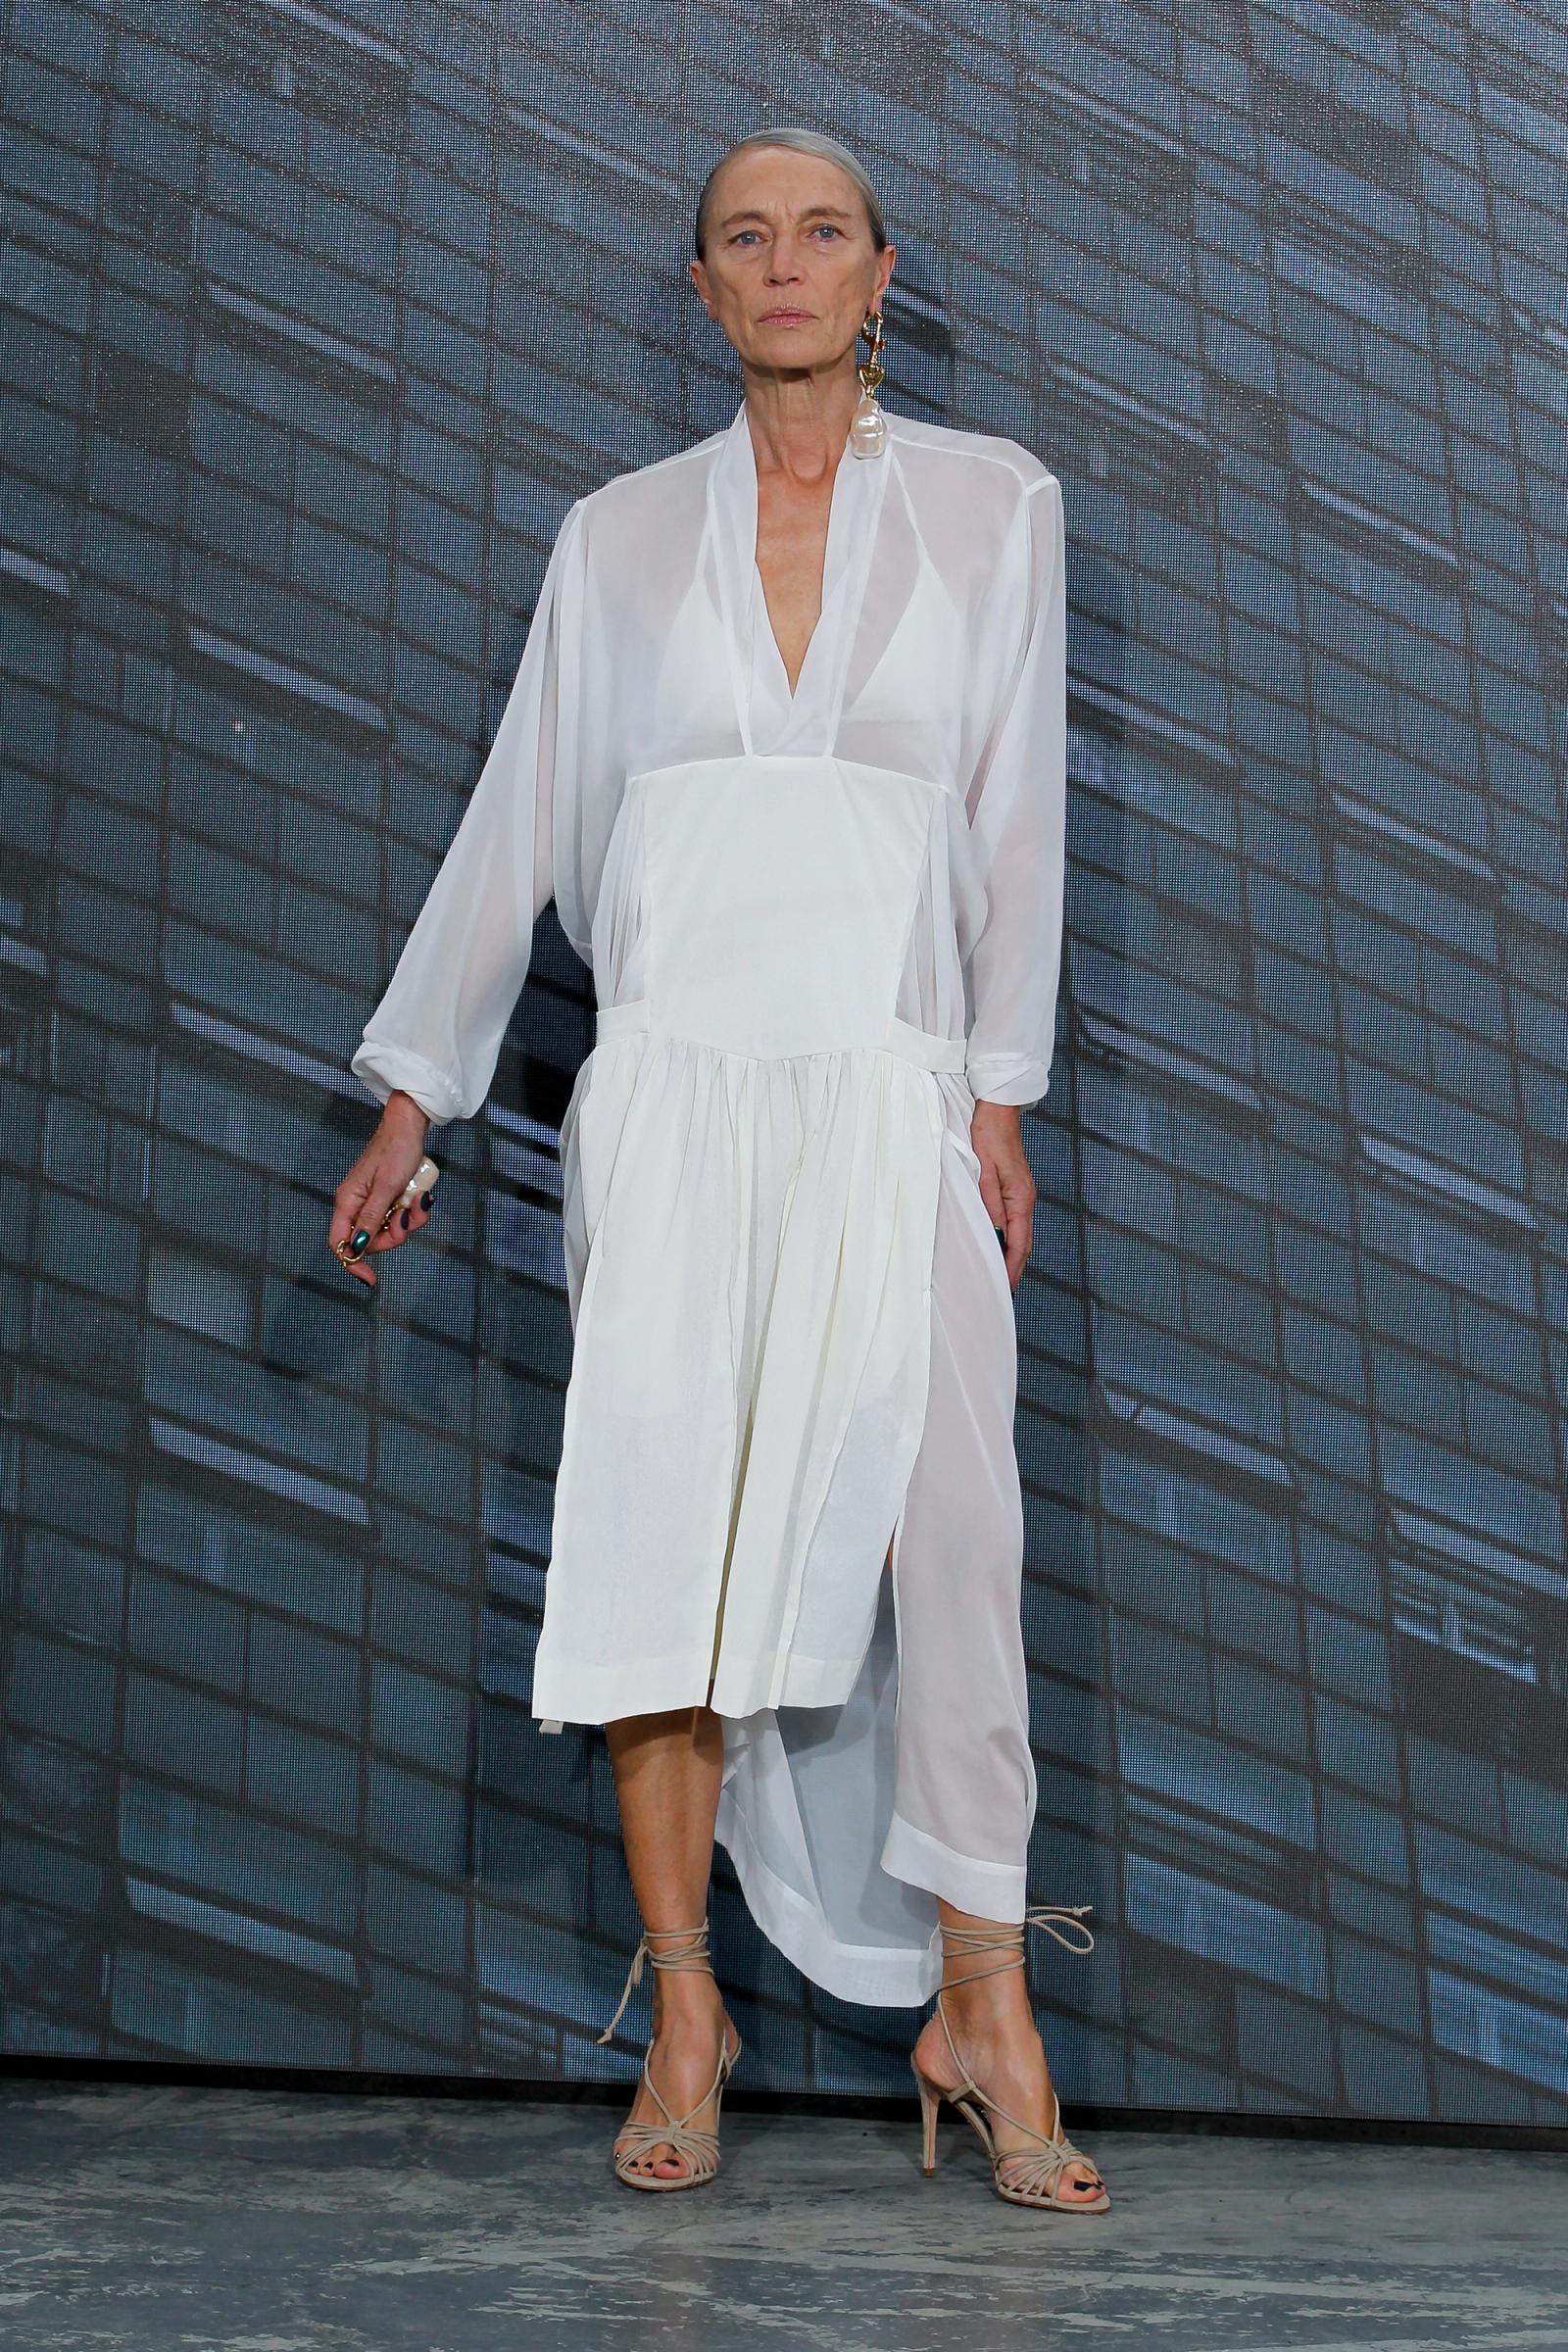 Andeas Kronthaler - for Vivienne Westwood S/S 22 styled by Sabina Schreder